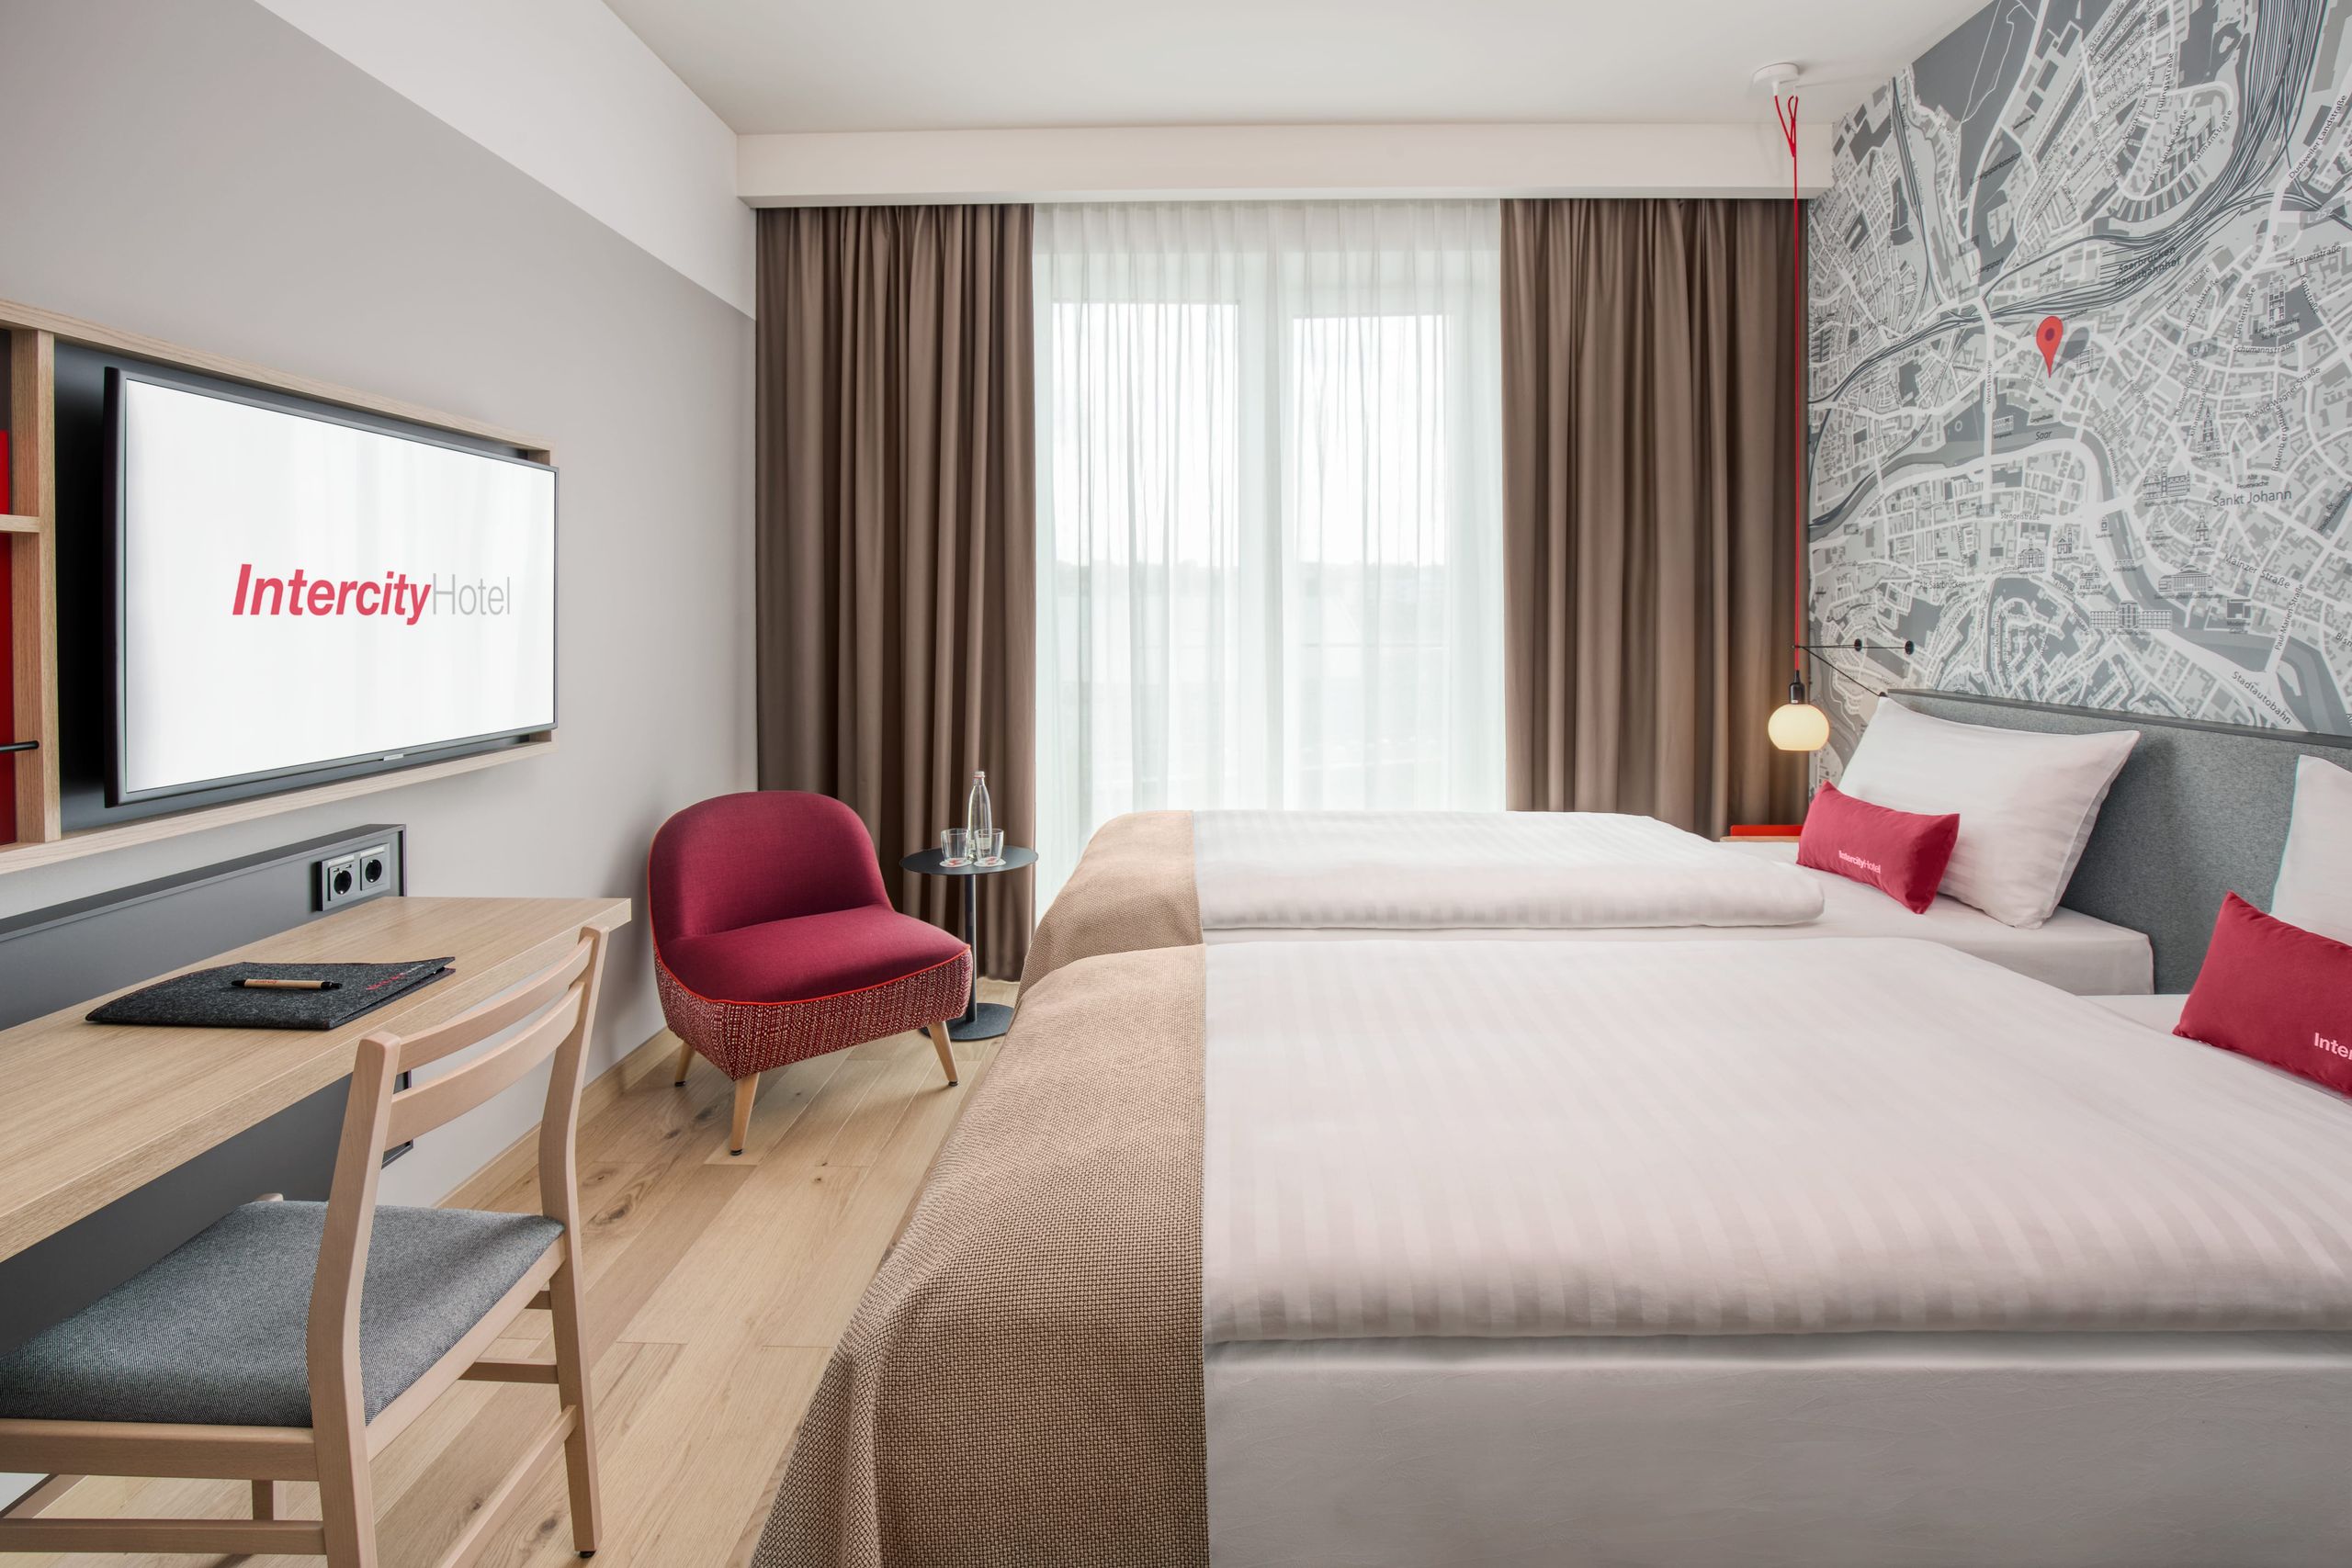 Hôtel à Sarrebruck | IntercityHotel Sarrebruck - Chambres d'affaires avec lits séparés